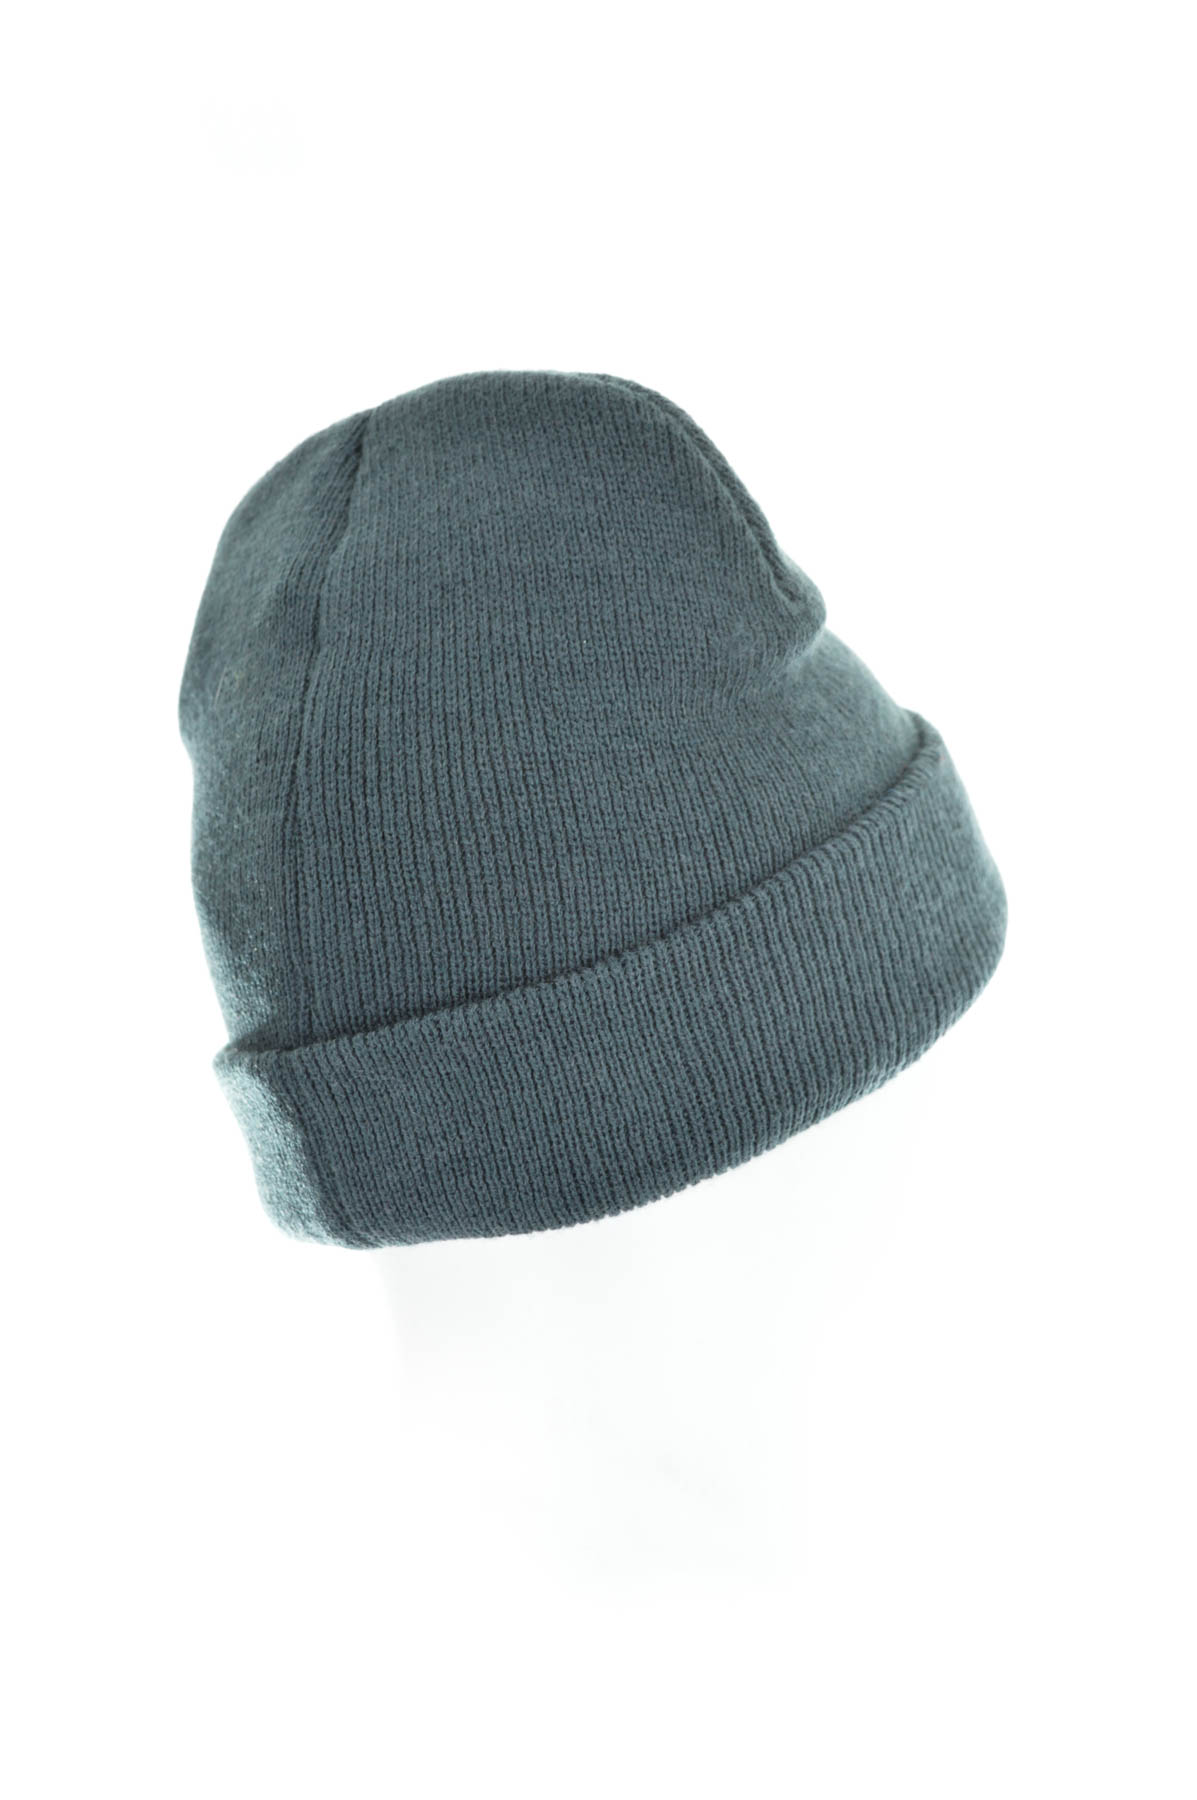 Boy's hat - Thinsulate - 1